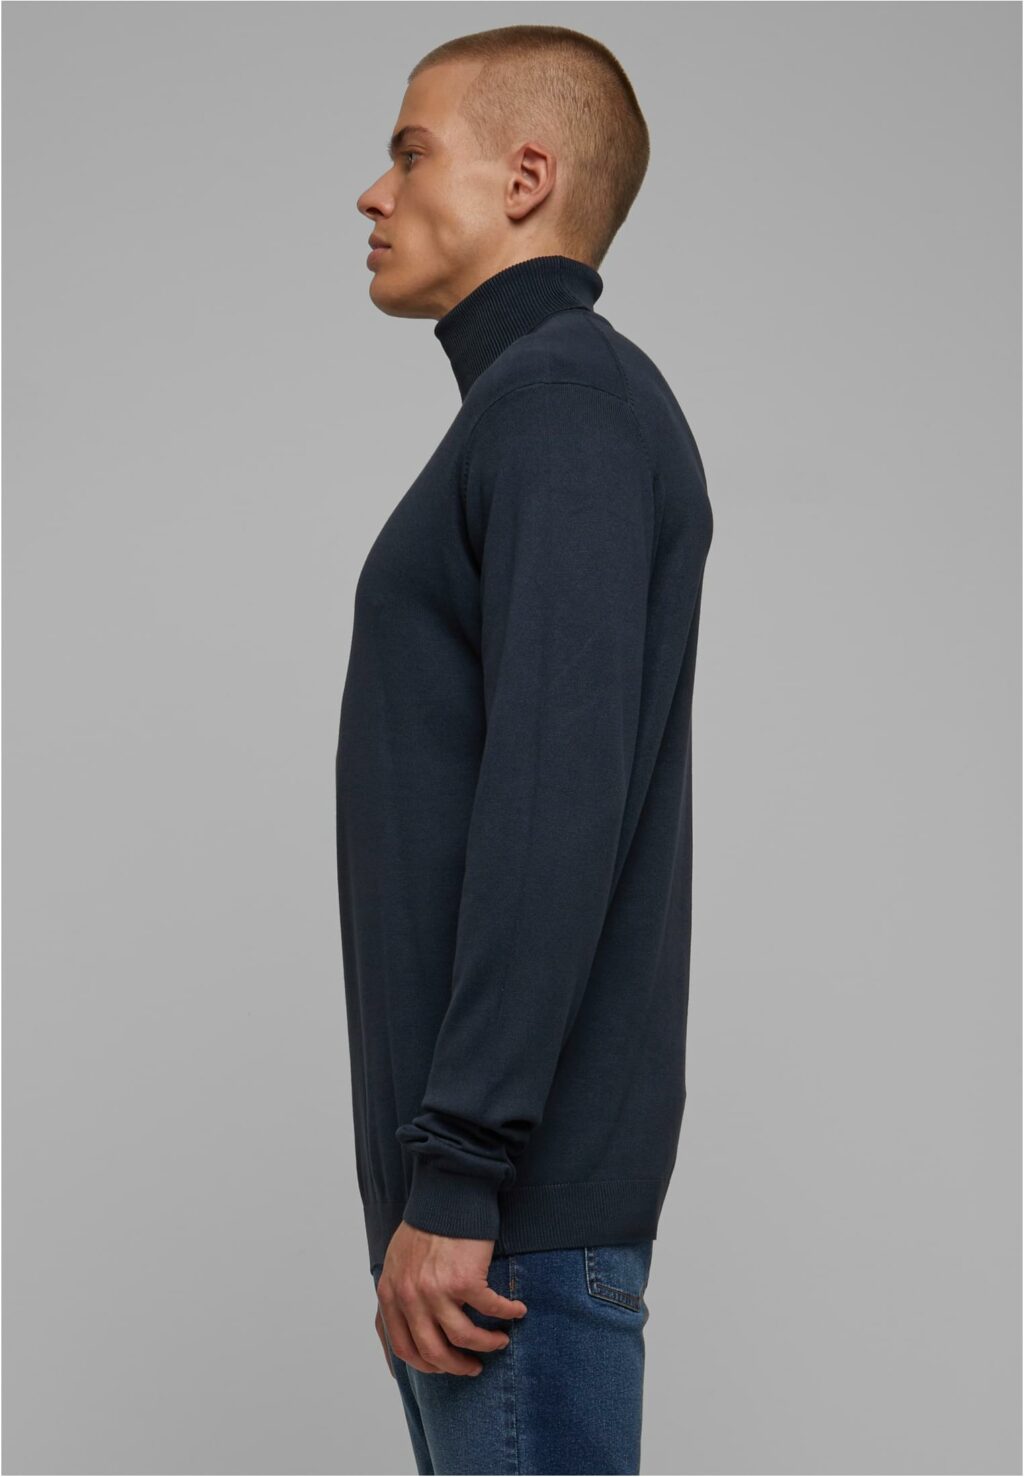 Urban Classics Knitted Turtleneck Sweater navy TB6360